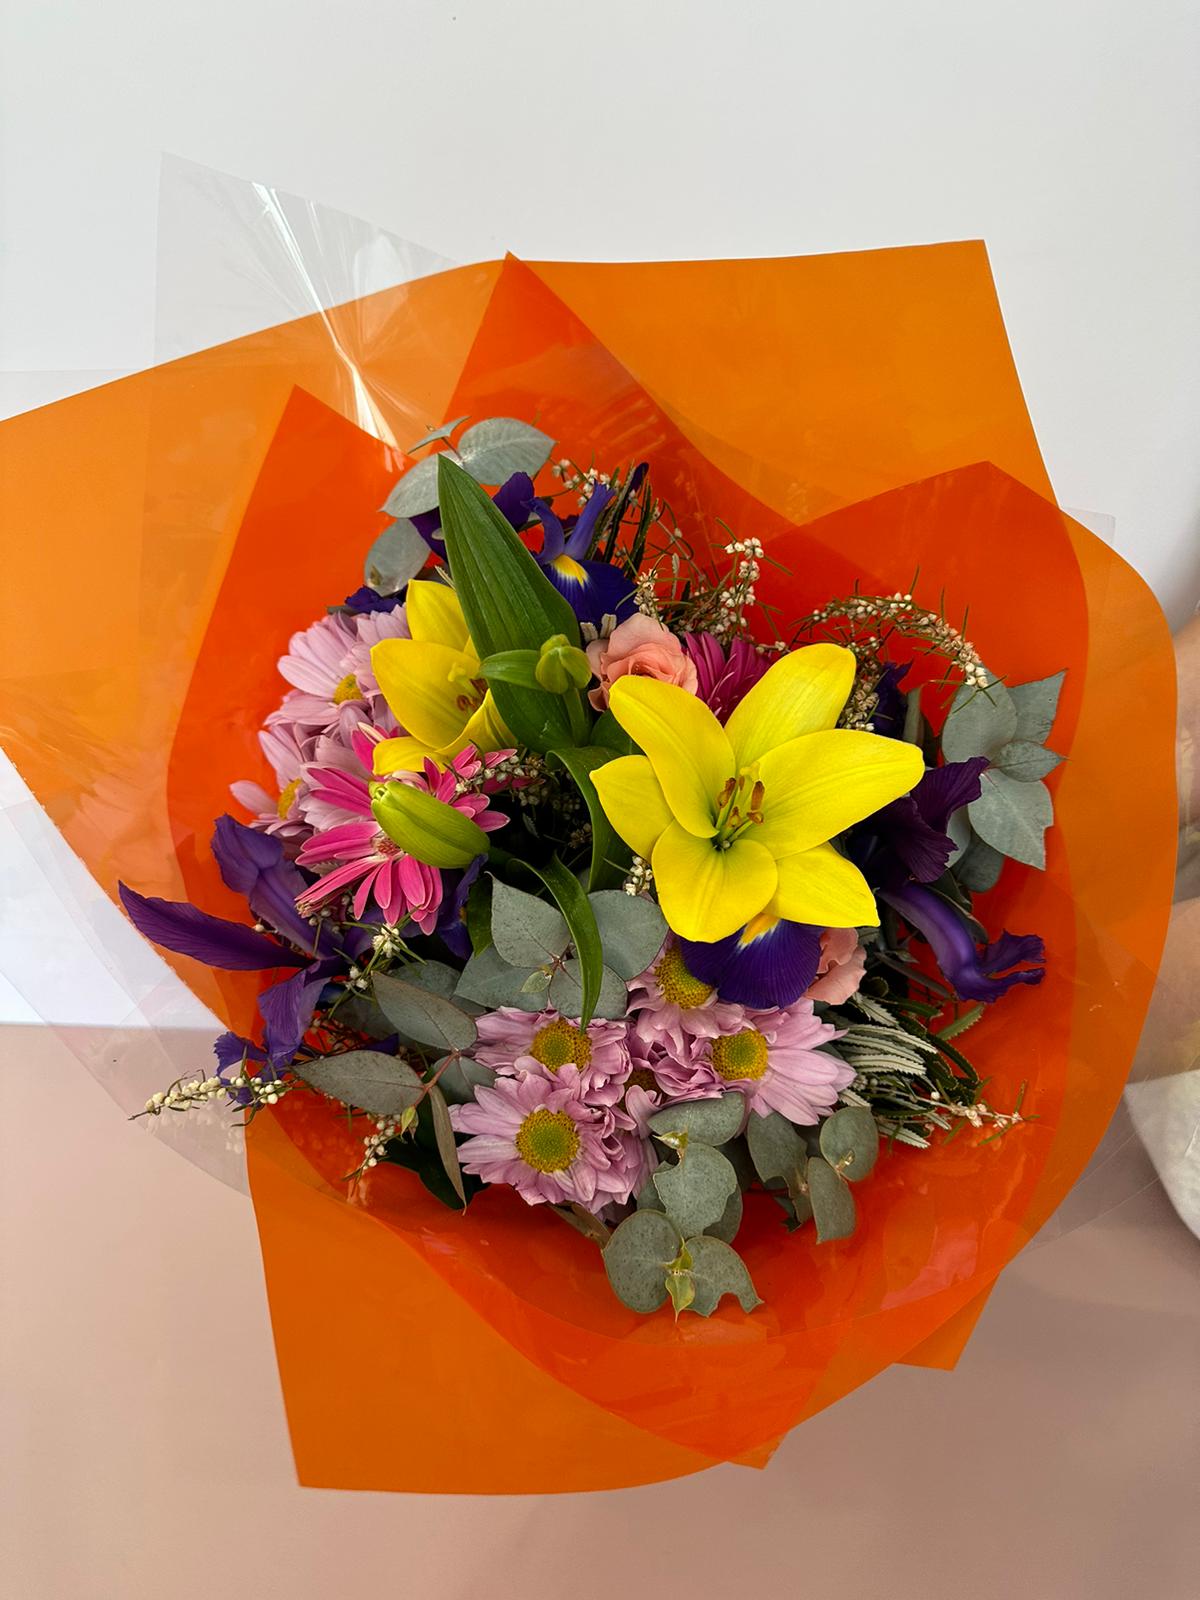 Flower Delivery Perth | Flower Bouquets | Florist Choice